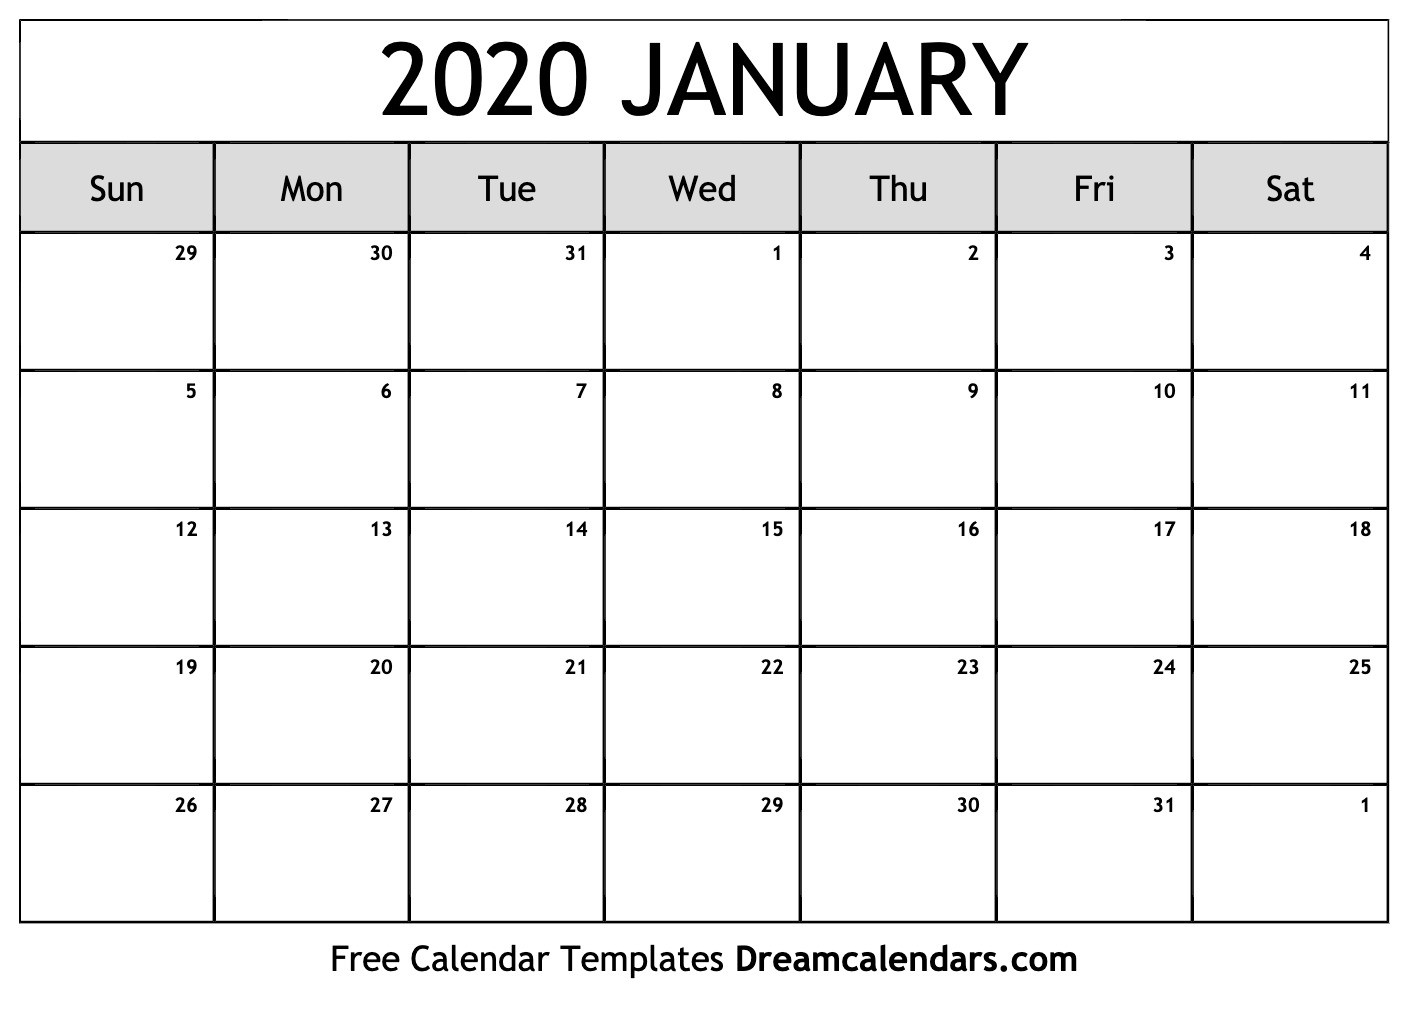 Dream Calendars - Make Your Calendar Template Blog-Jewish Calendar January 2020